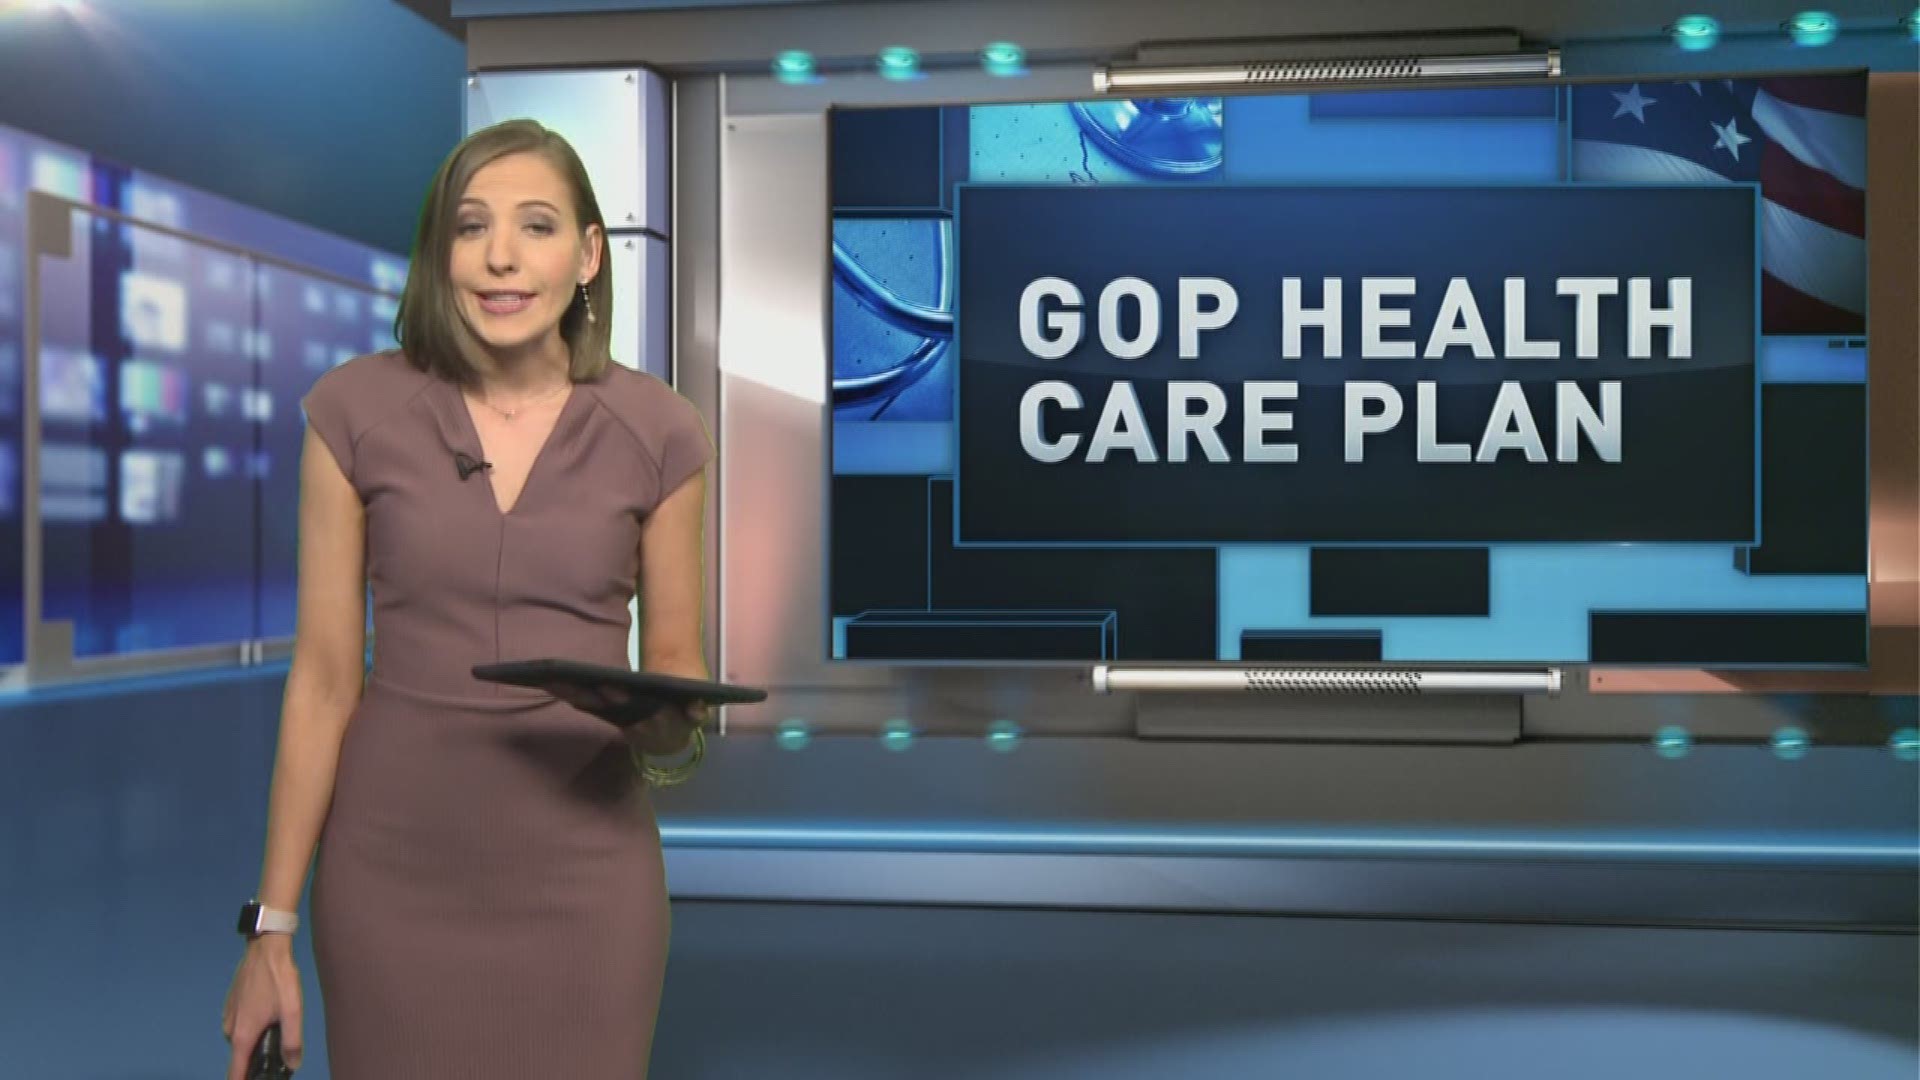 Susan Byrd expresses concern over losing Medicaid coverage under the proposed GOP healthcare bill.